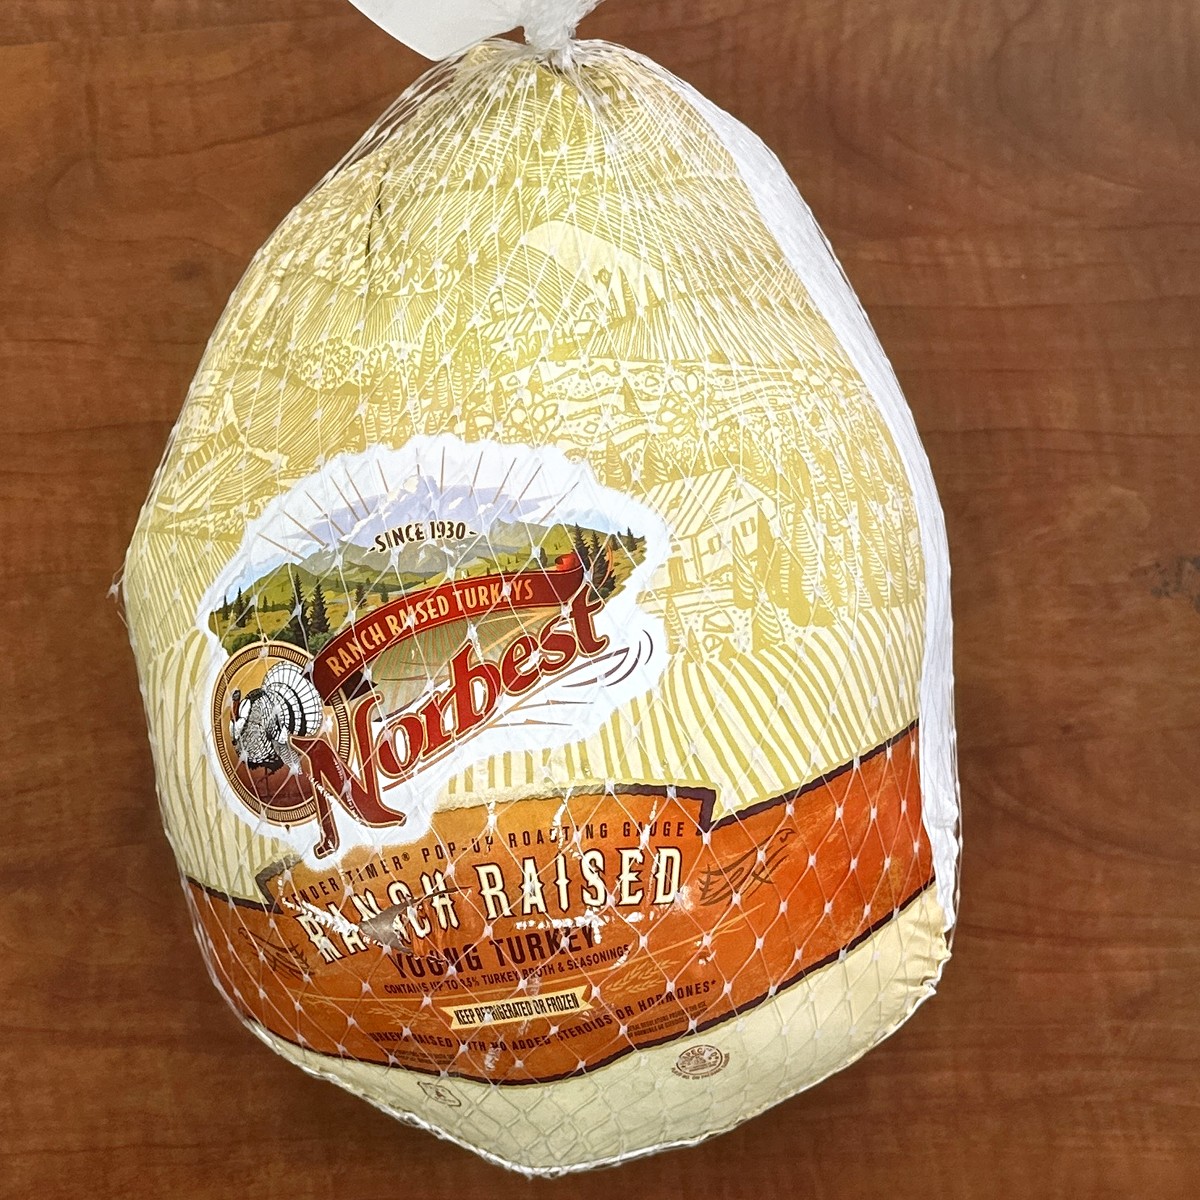 Norbest Whole Raw Turkey (Frozen)